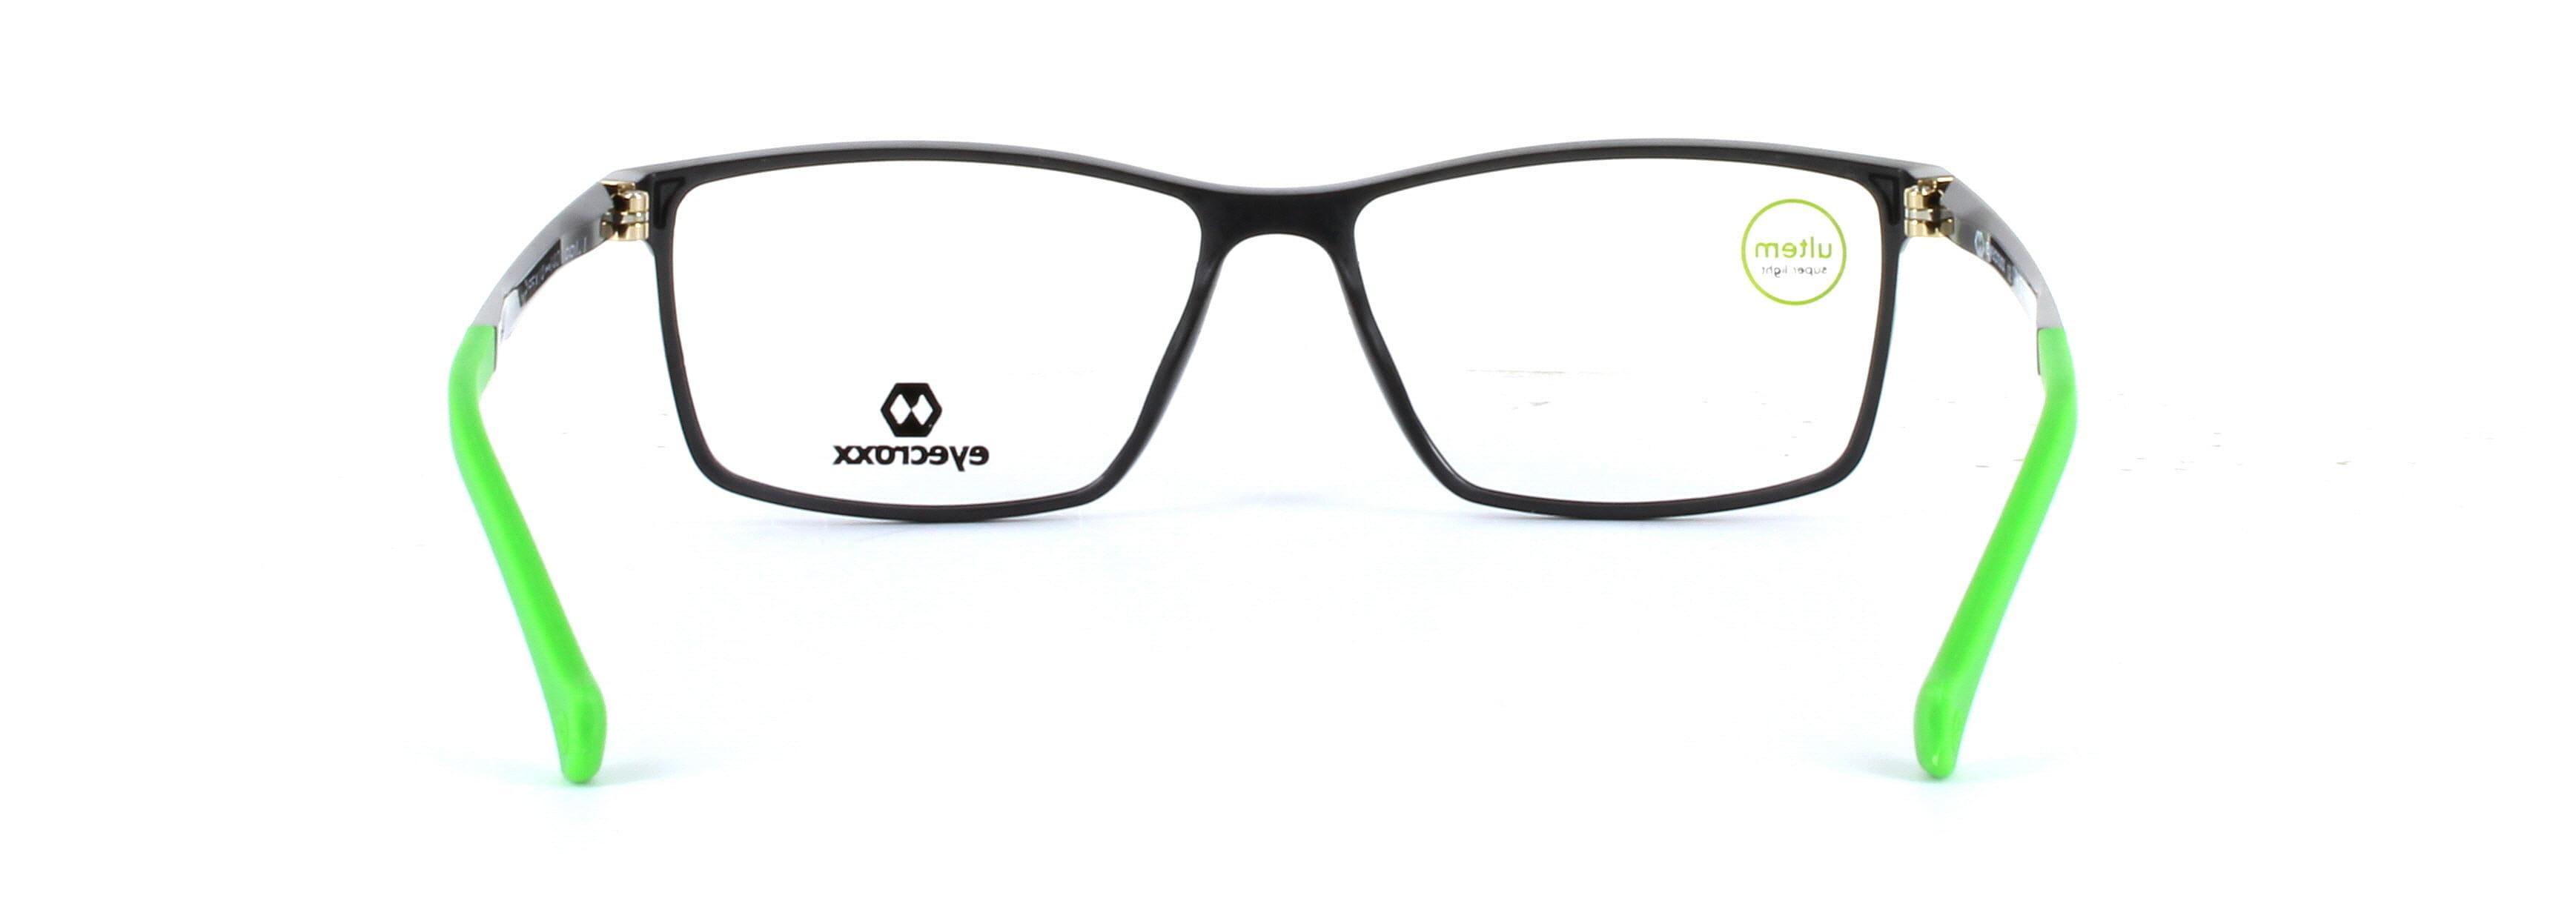 Eyecroxx 587 Black and Green Full Rim Rectangular Plastic Glasses - Image View 3